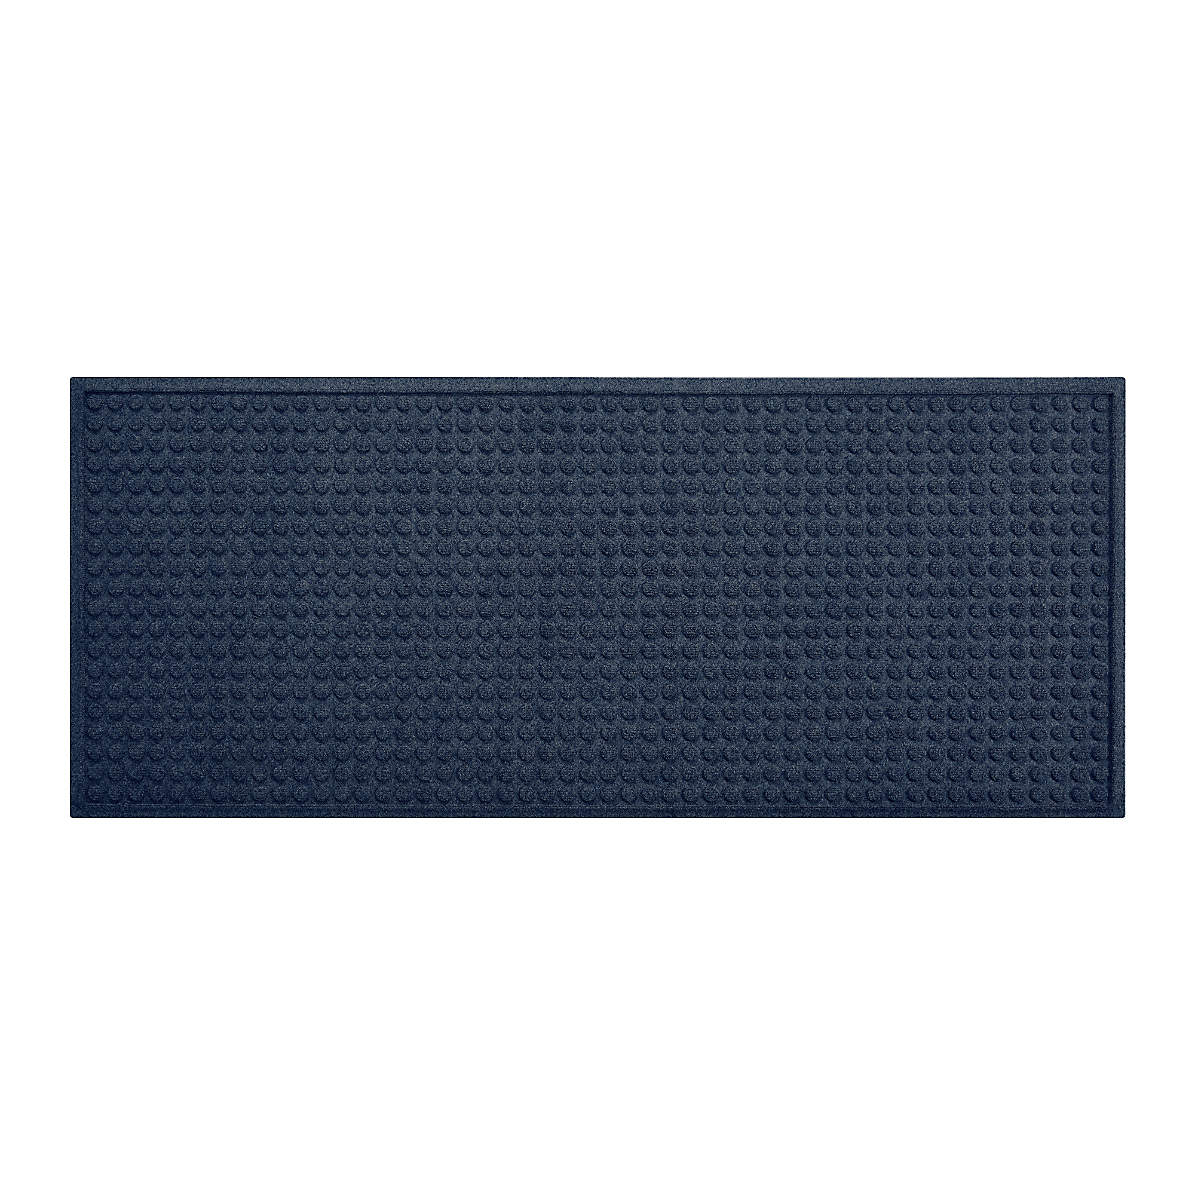 Thirsty Dots Light Grey Doormat 36x60 + Reviews